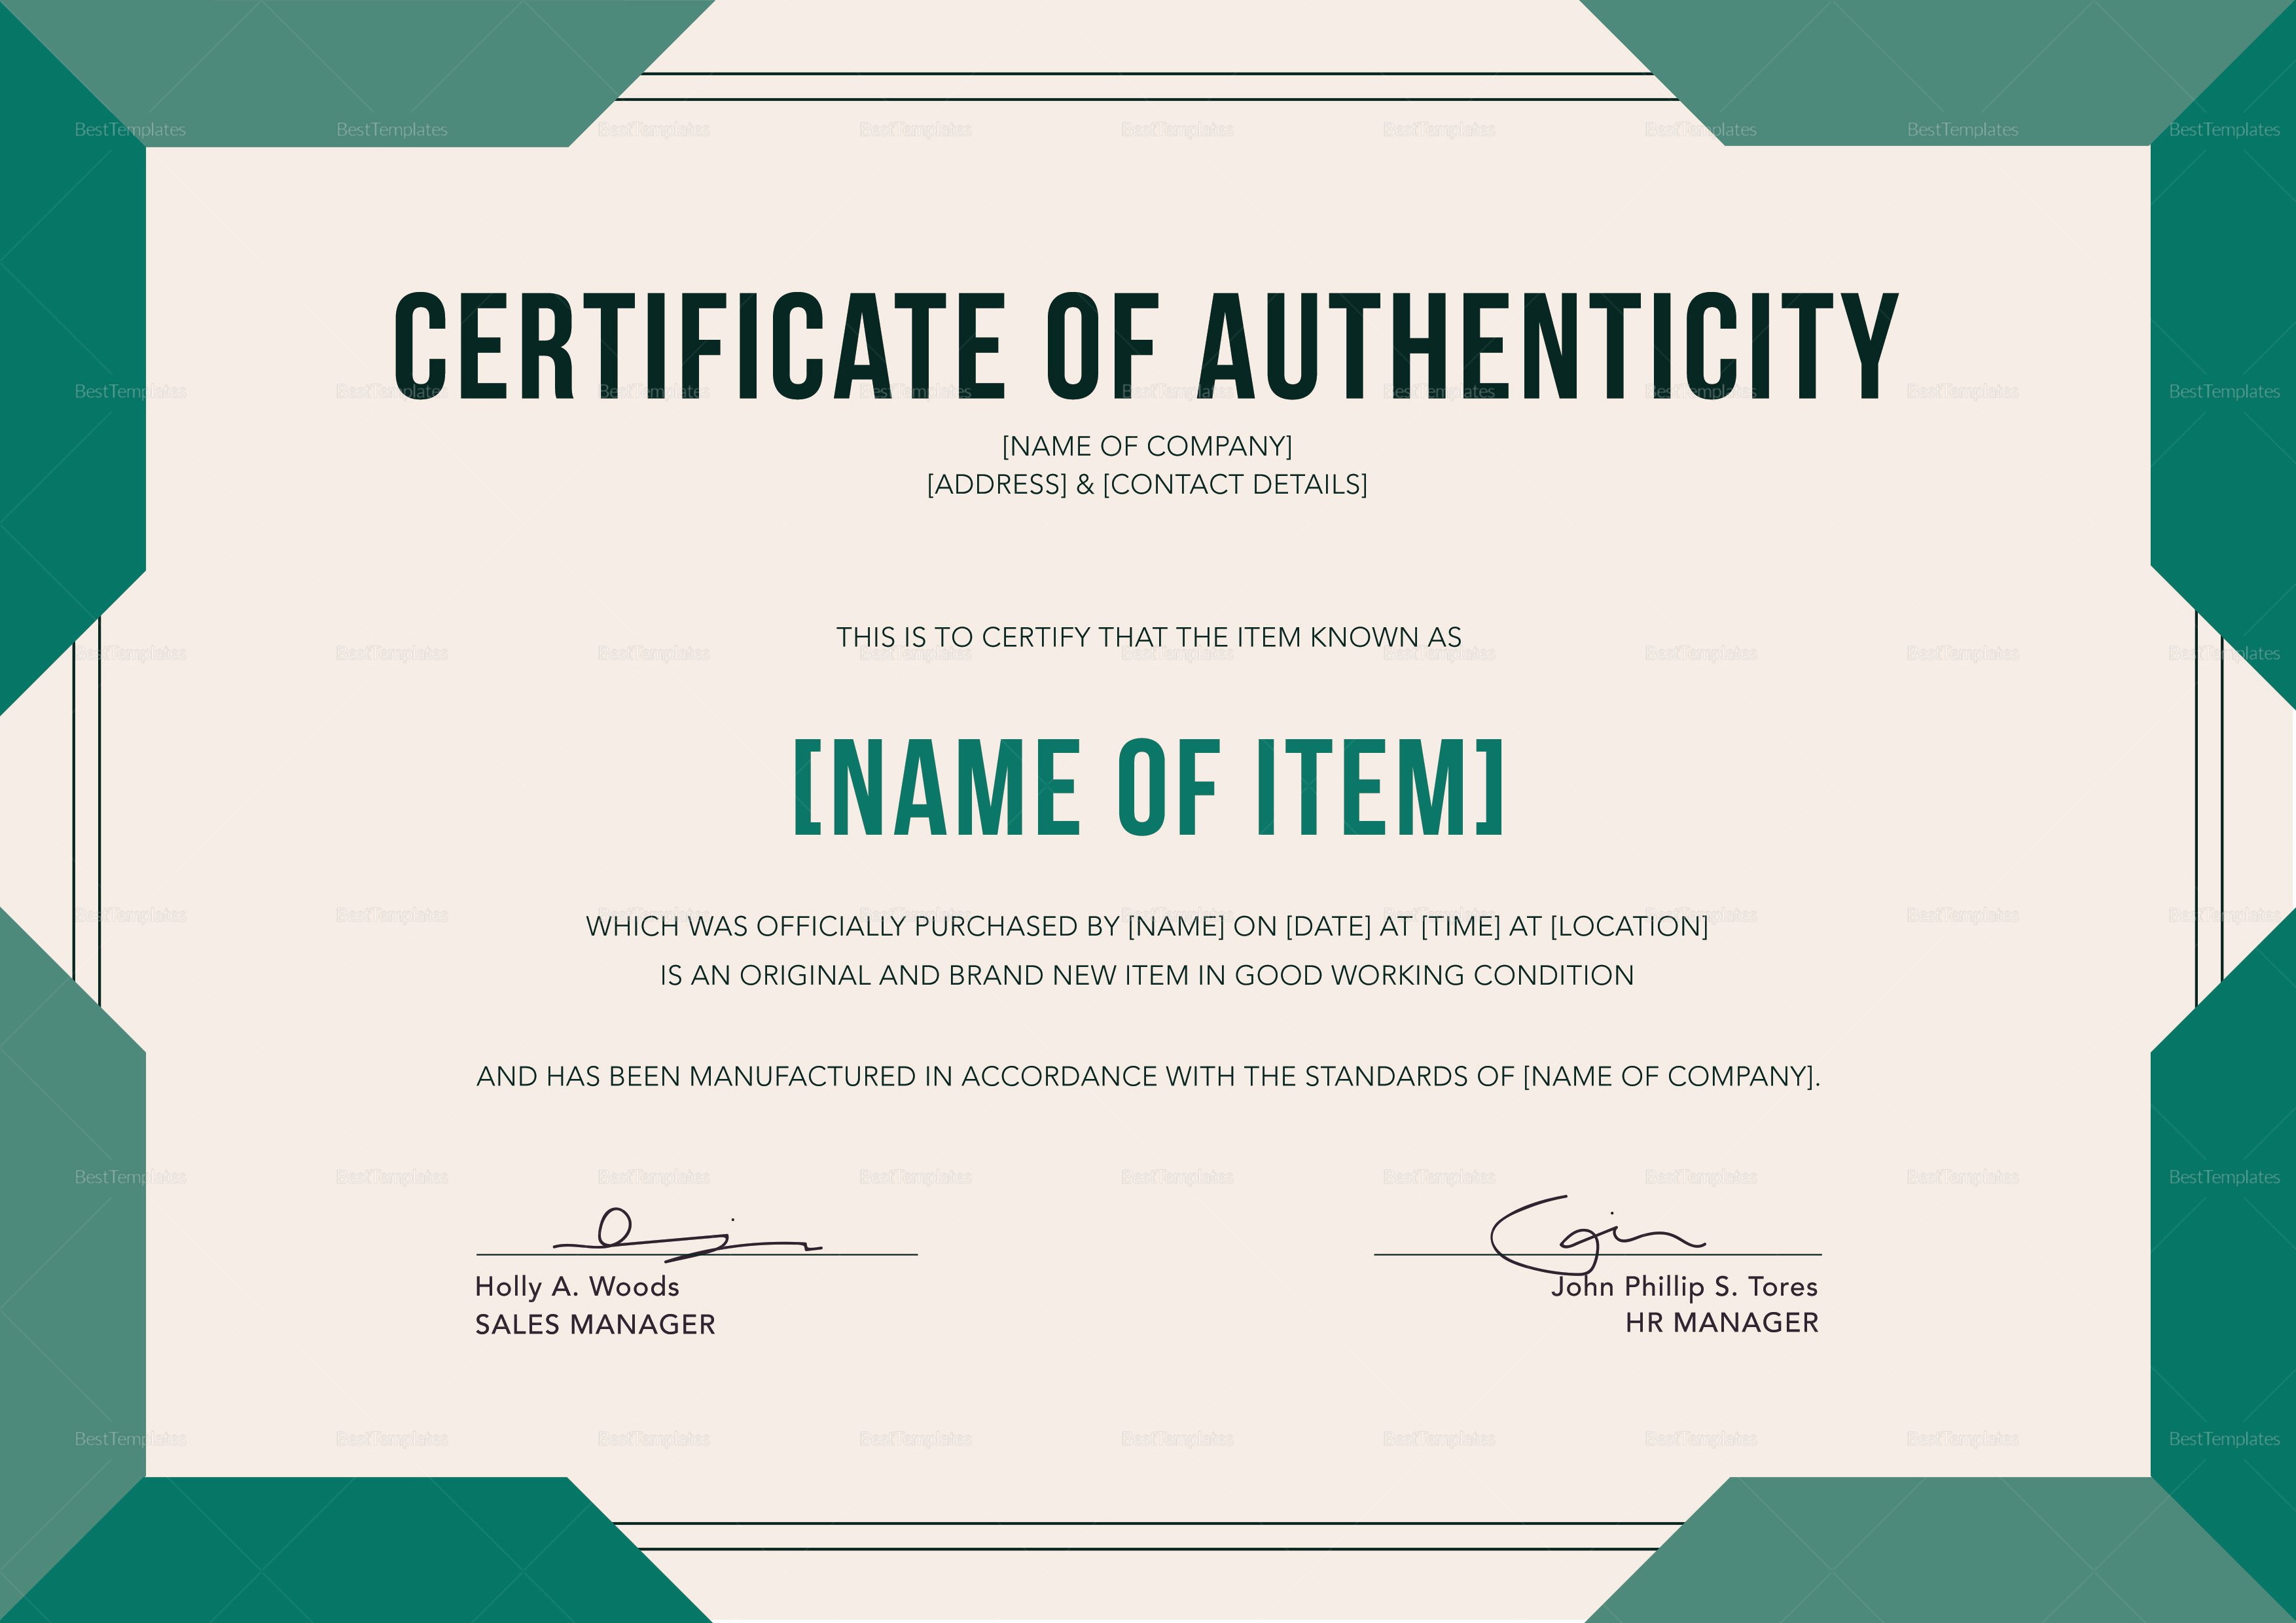 Certificate Of Authenticity Autograph Template Inspirational Elegant Certificate Of Authenticity Design Template In Psd